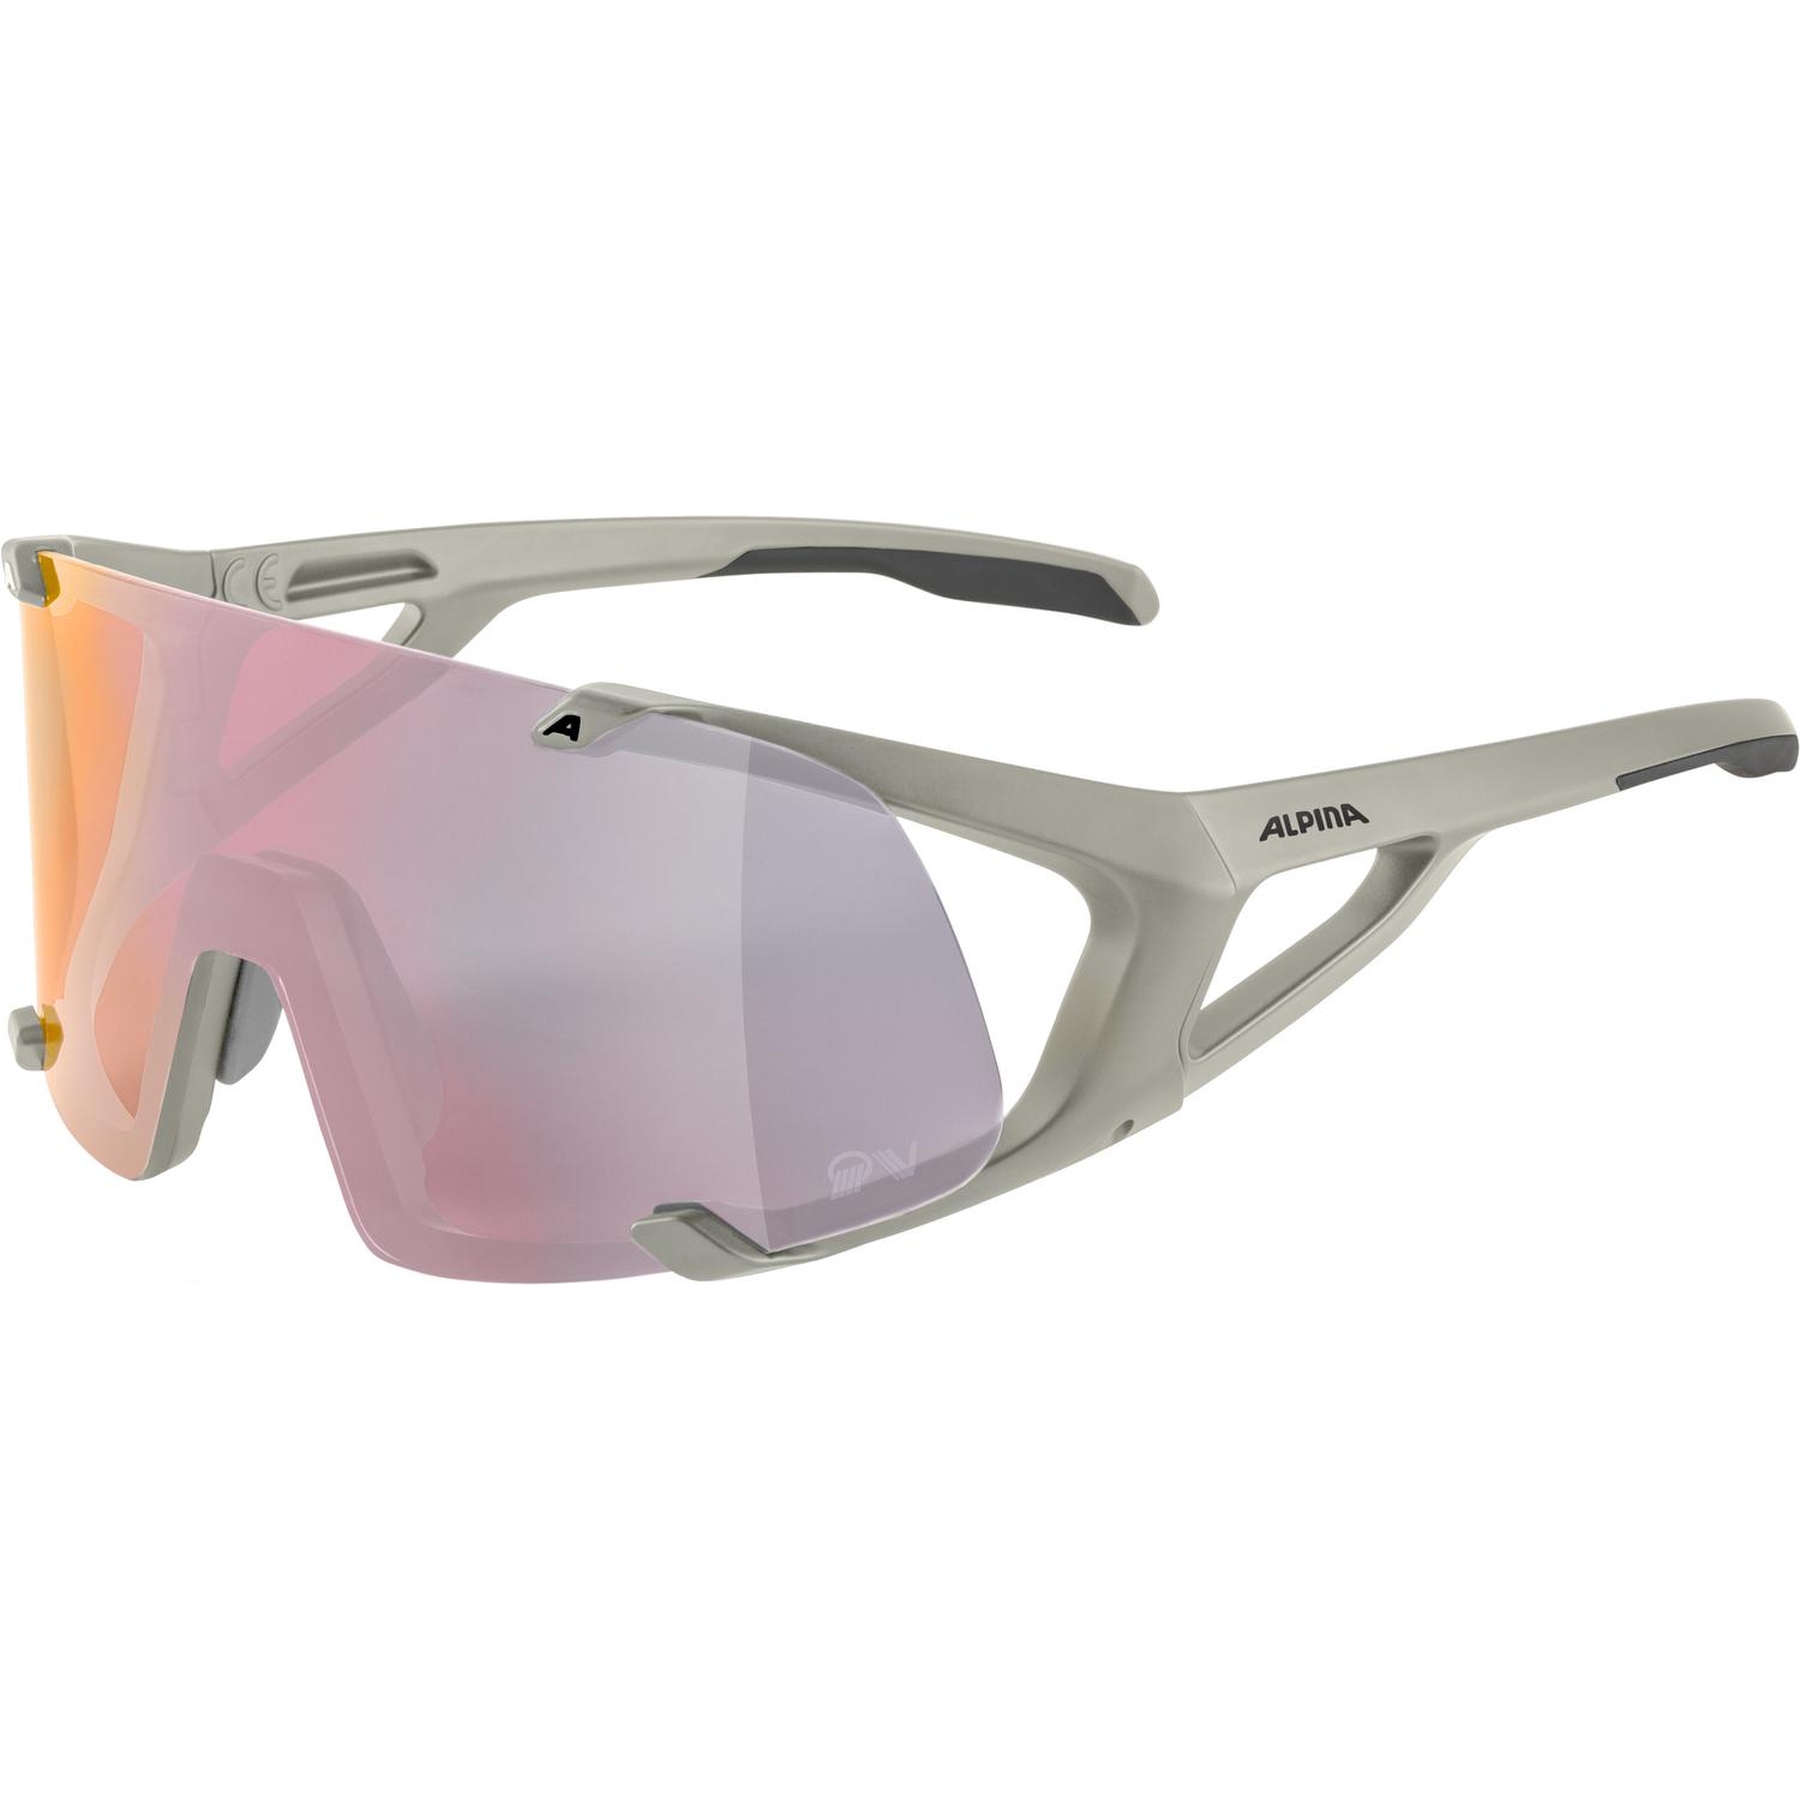 Productfoto van Alpina Hawkeye QV Glasses - cool-grey matt/Quattroflex Varioflex Rainbow Mirror